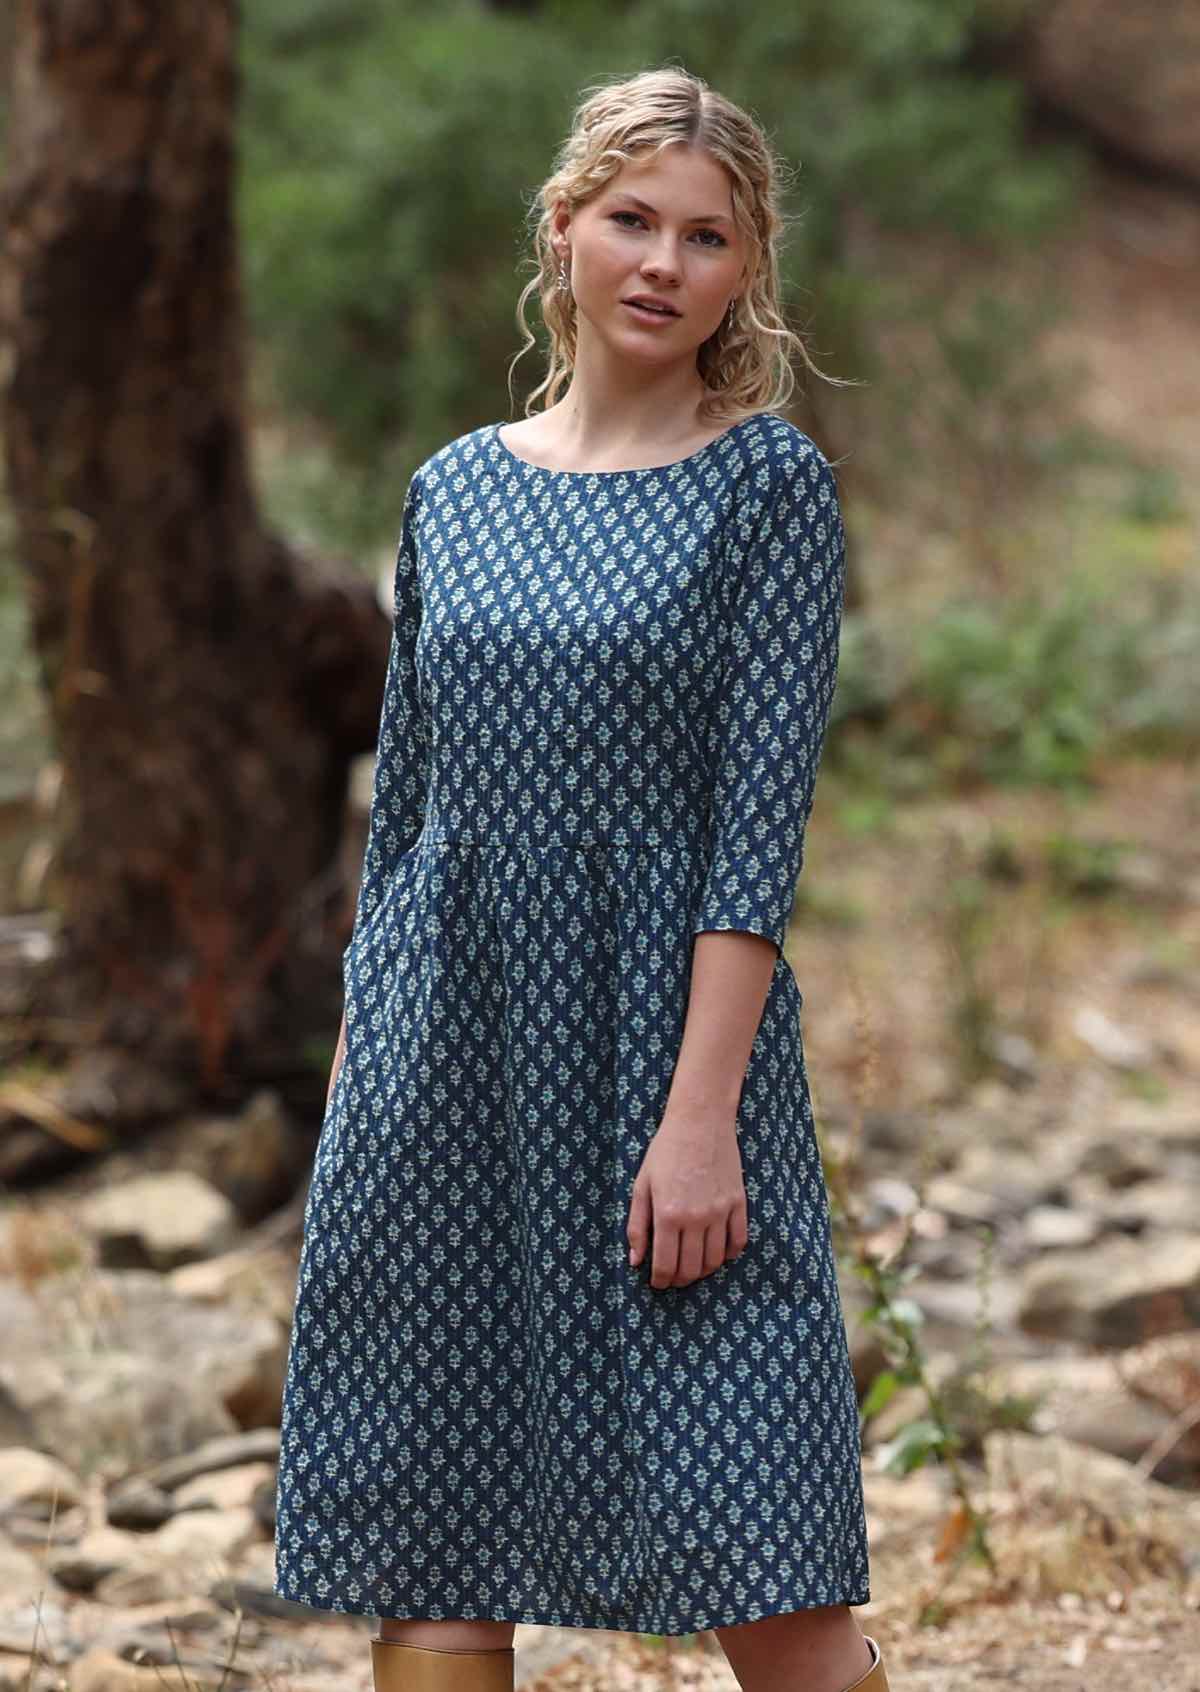 Wide round neckline, 3/4 sleeved cotton lined dress